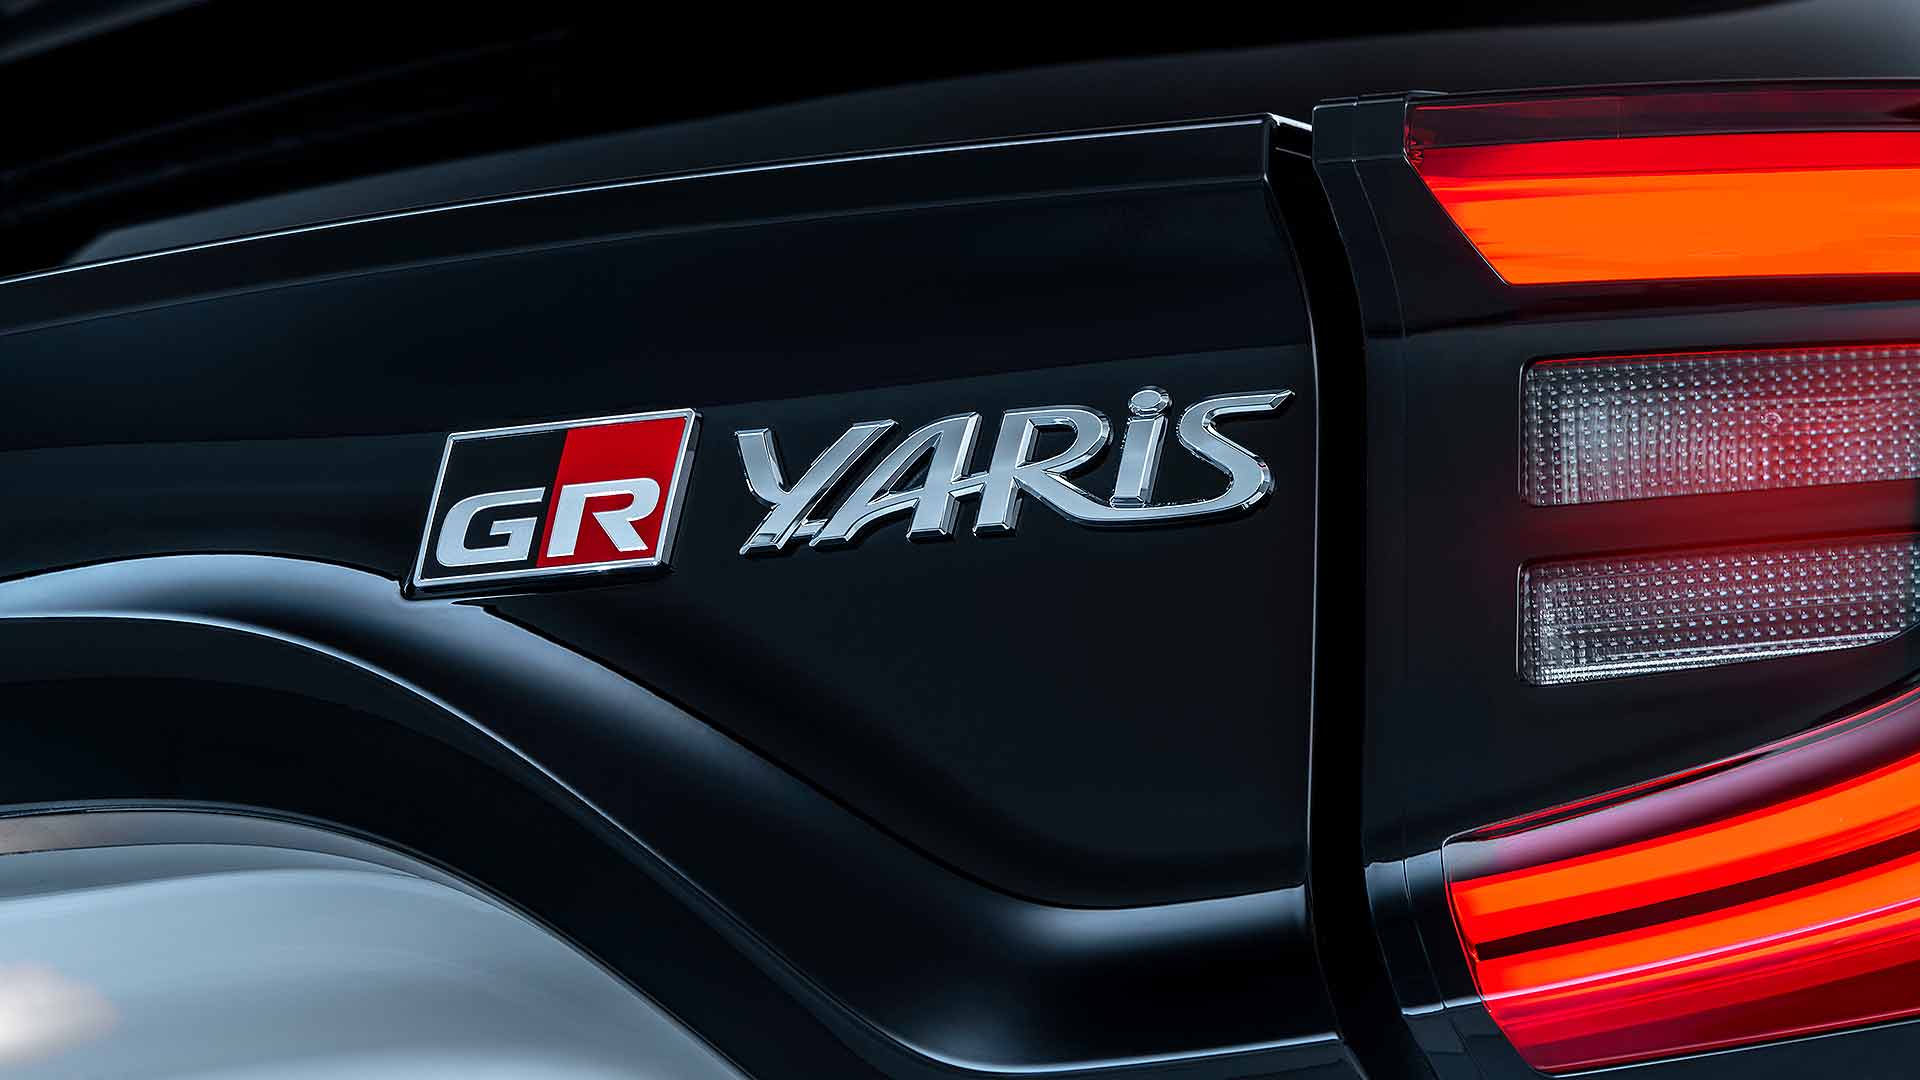 2020 Toyota Yaris GR